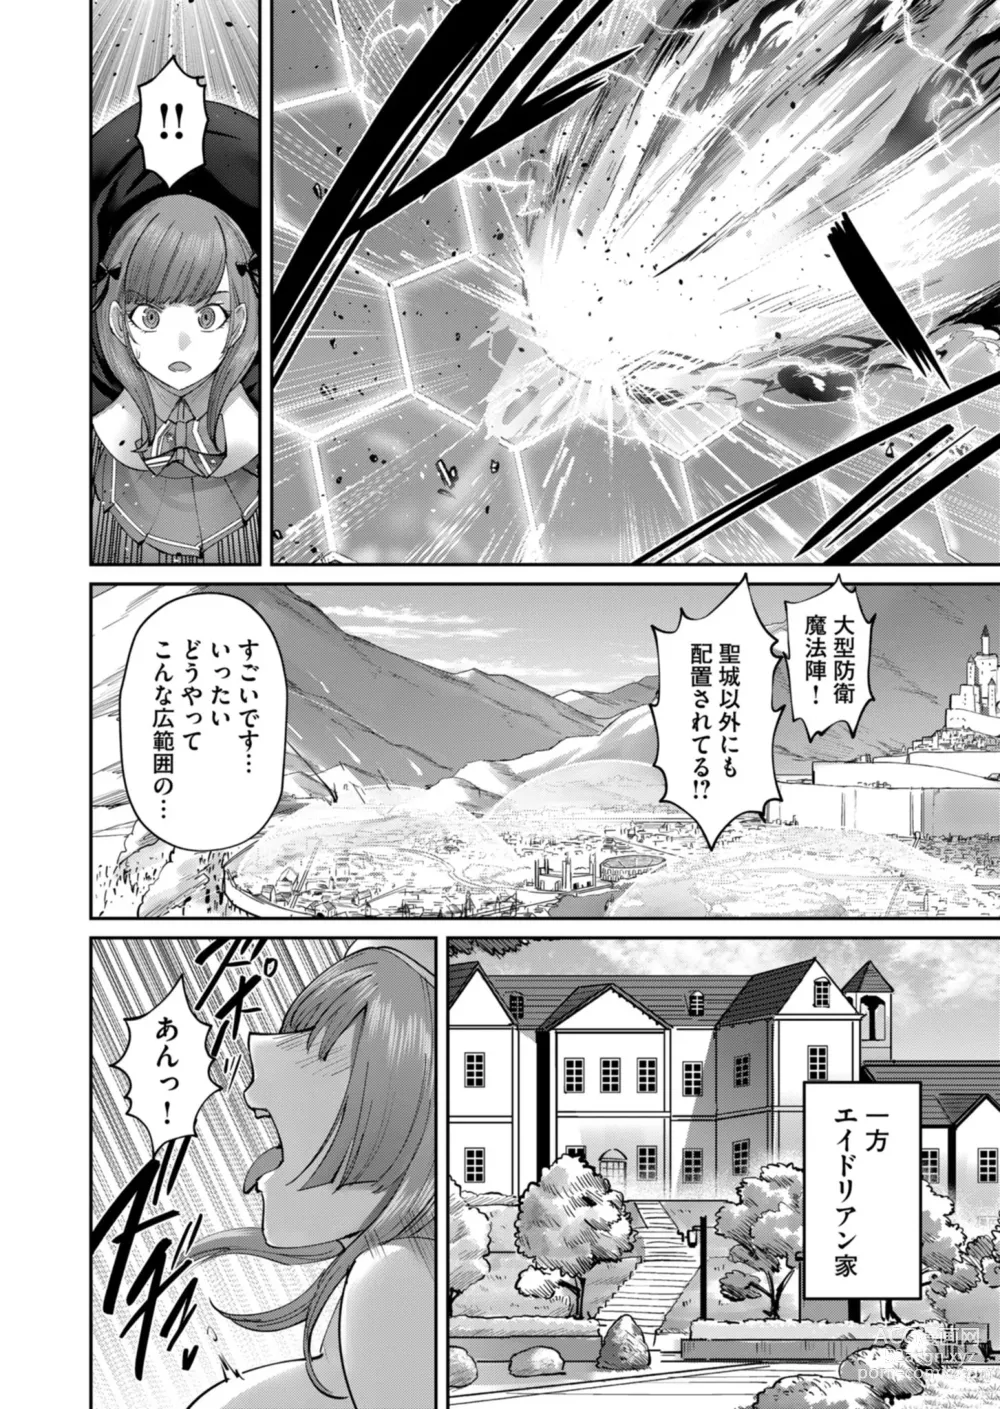 Page 164 of manga Kichiku Eiyuu Vol.06